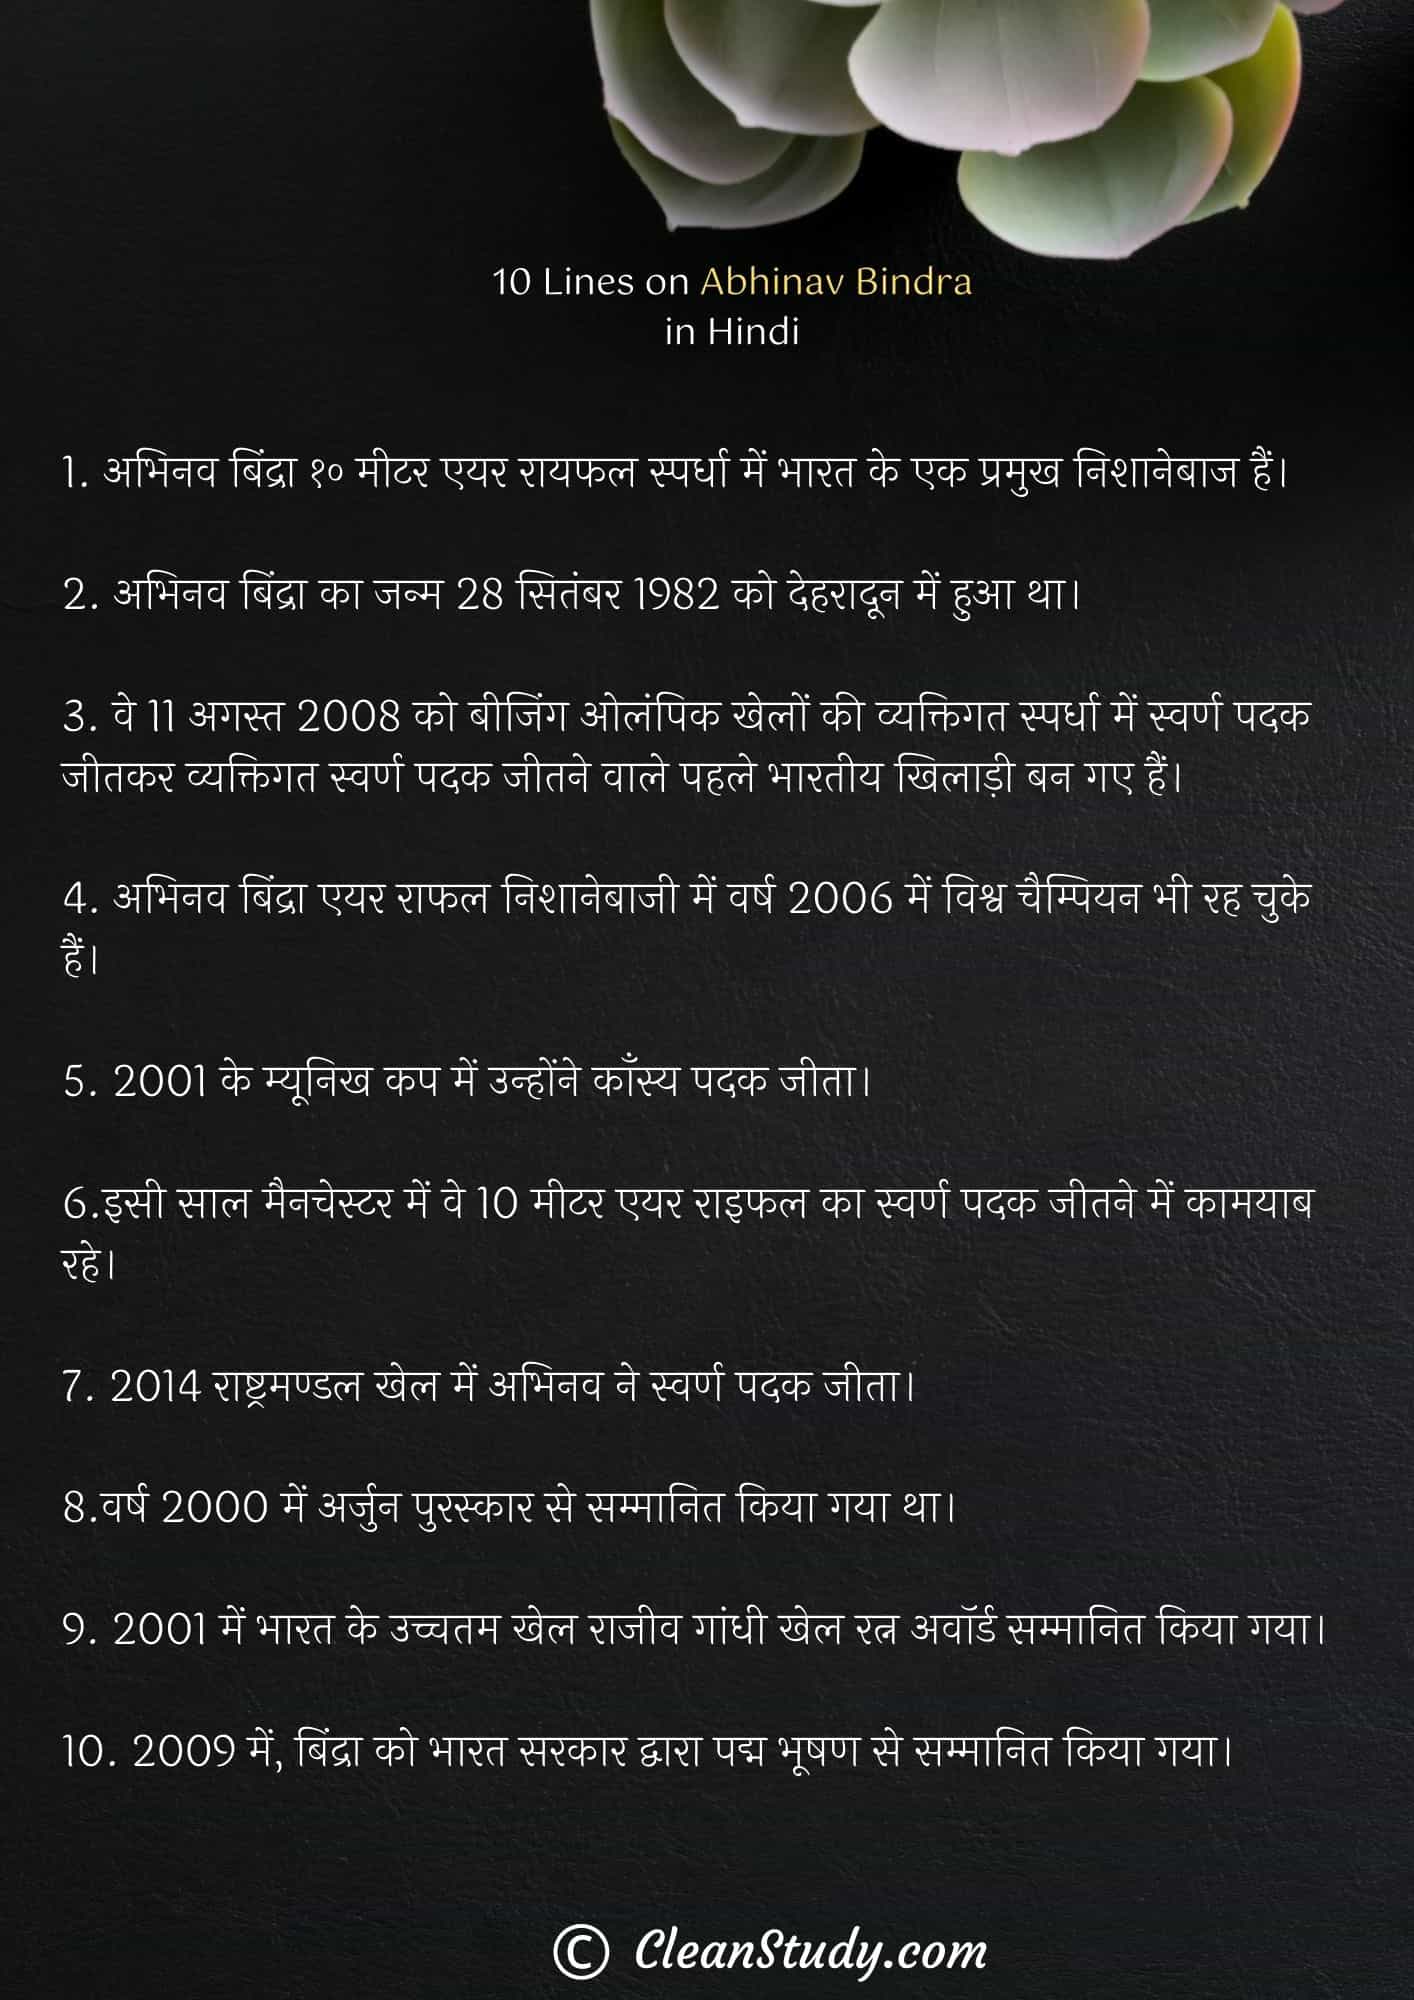 10 Lines on Abhinav Bindra in Hindi